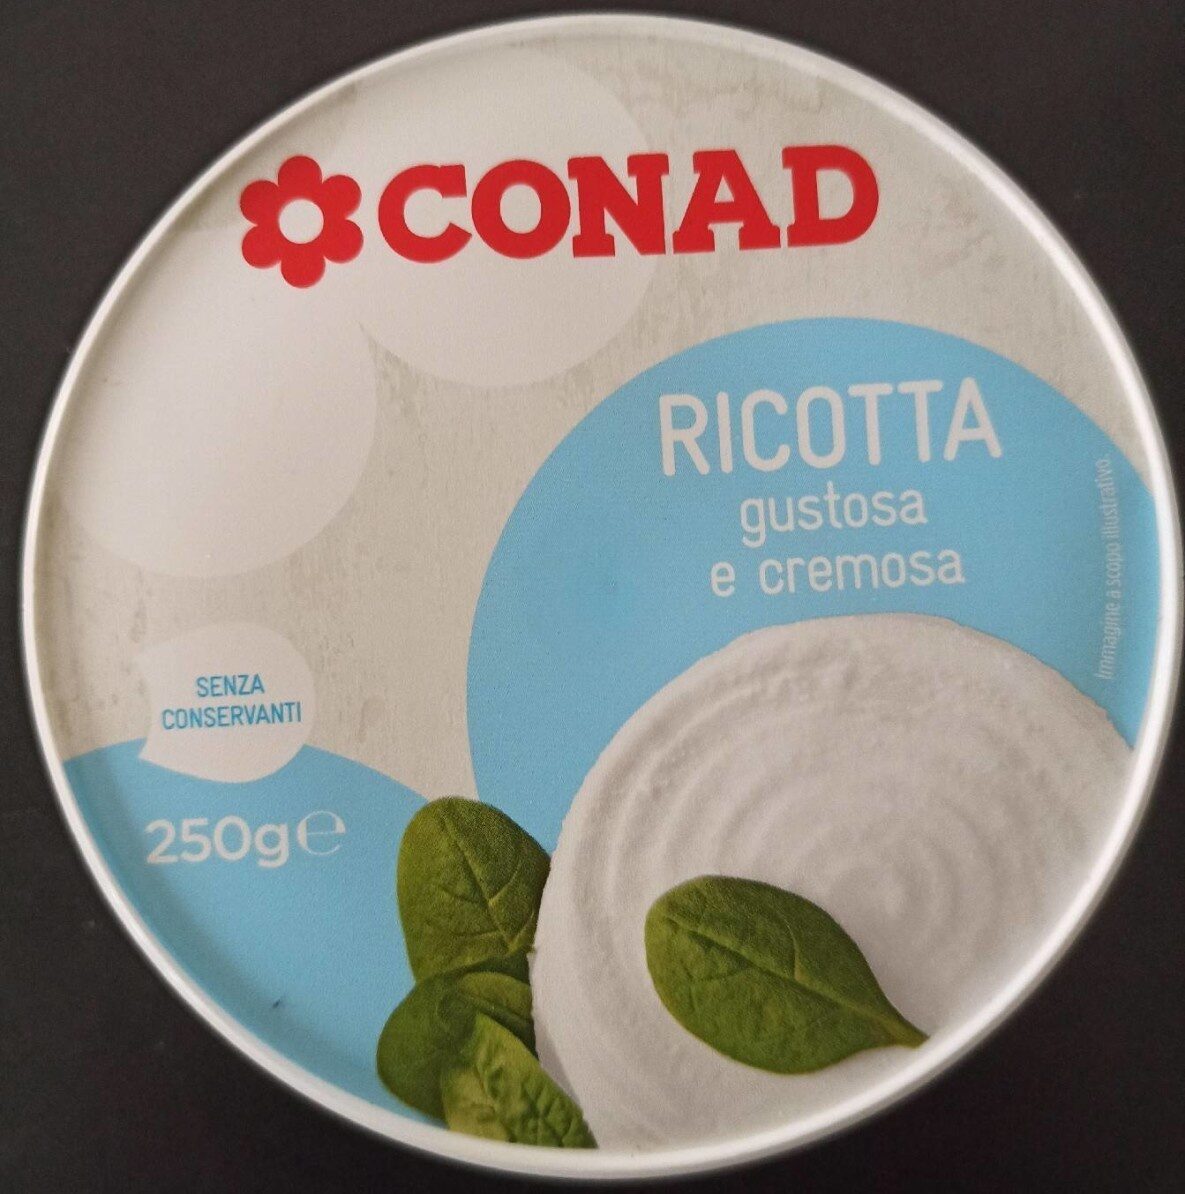 Ricotta Conad